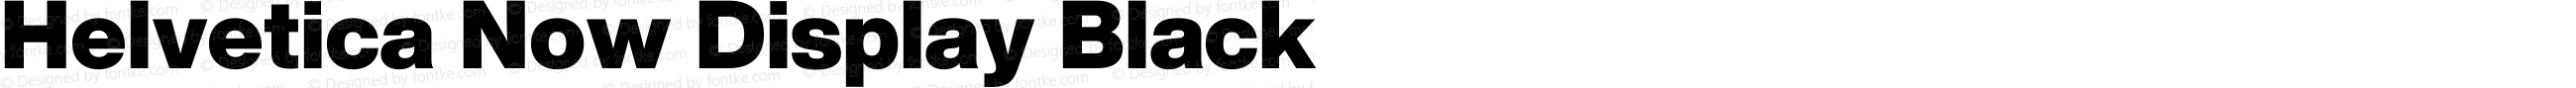 Helvetica Now Display Black